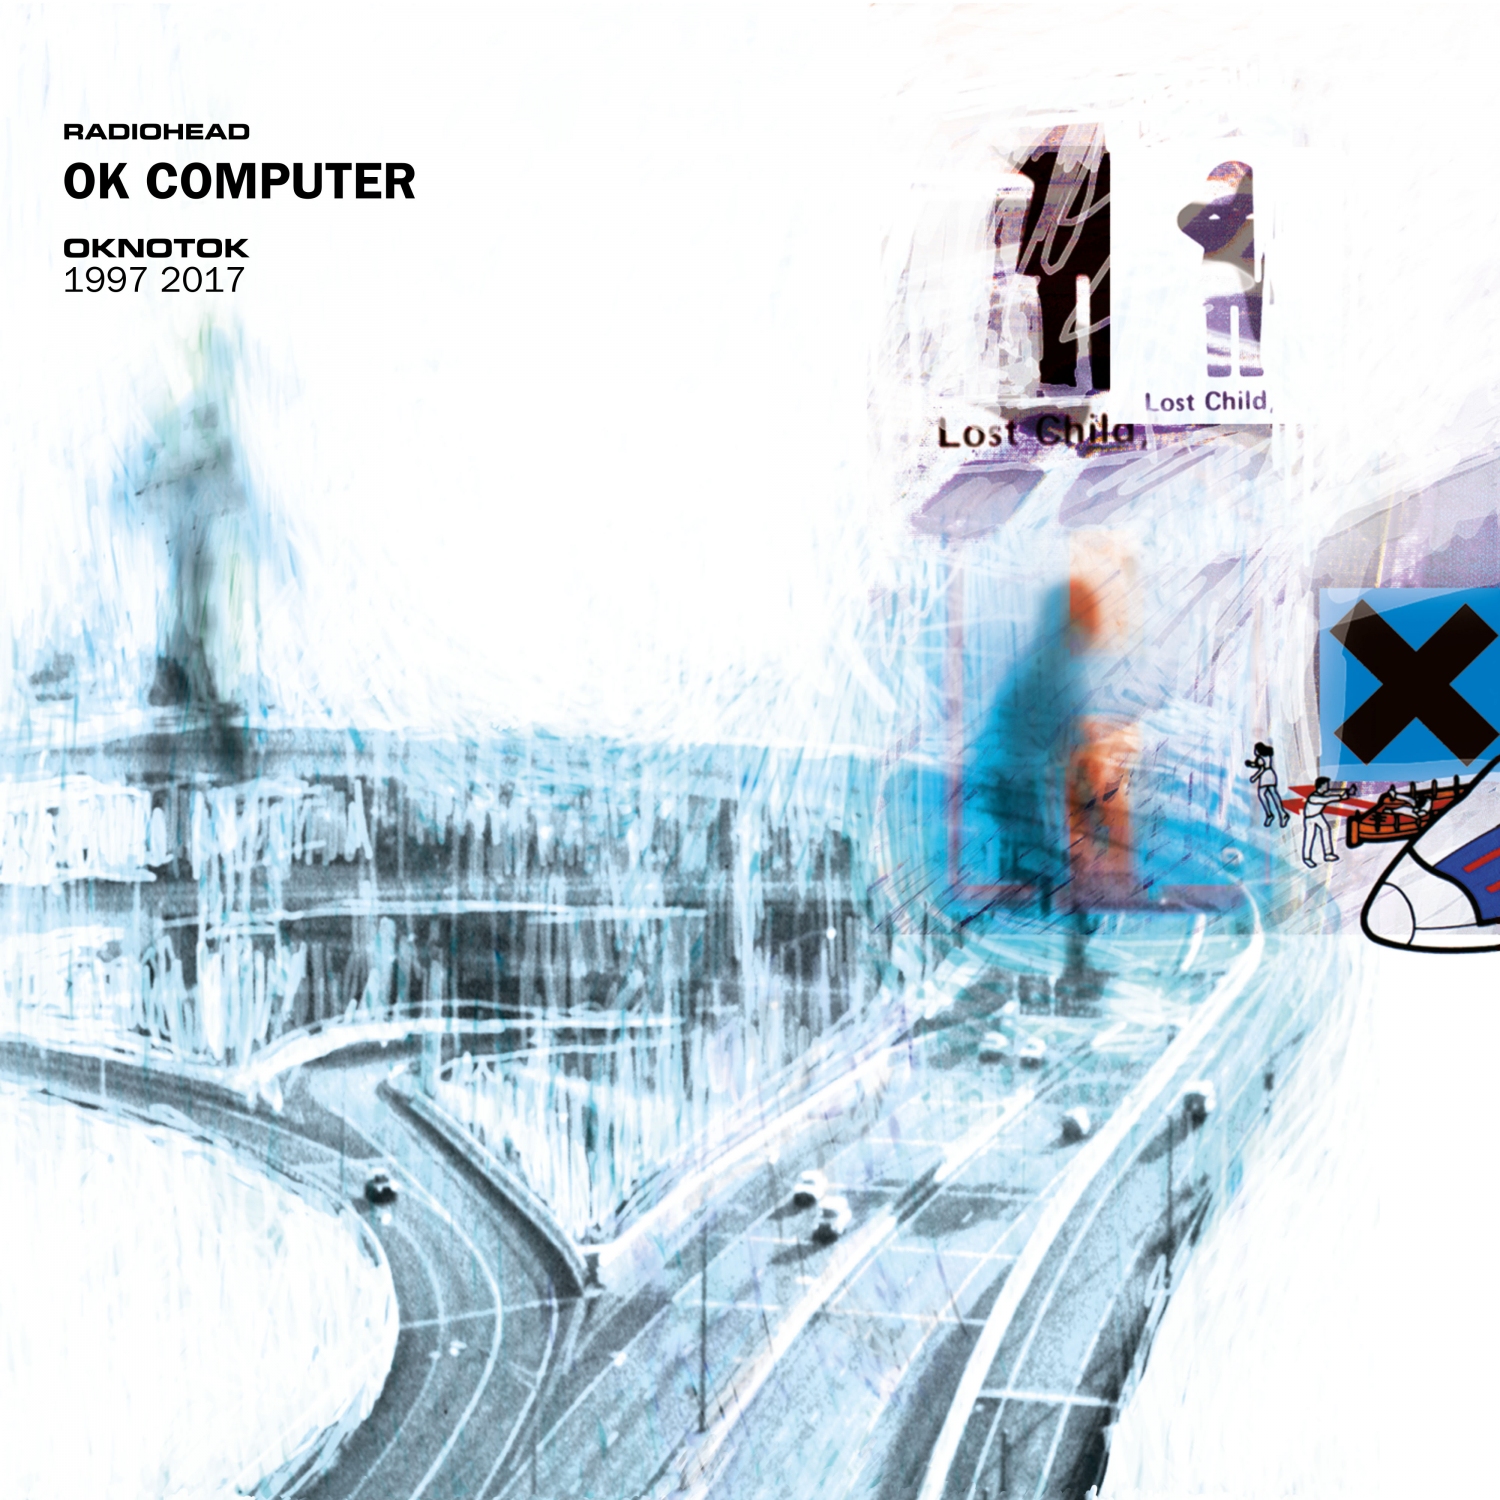 OK COMPUTER OKNOTOK - Radiohead